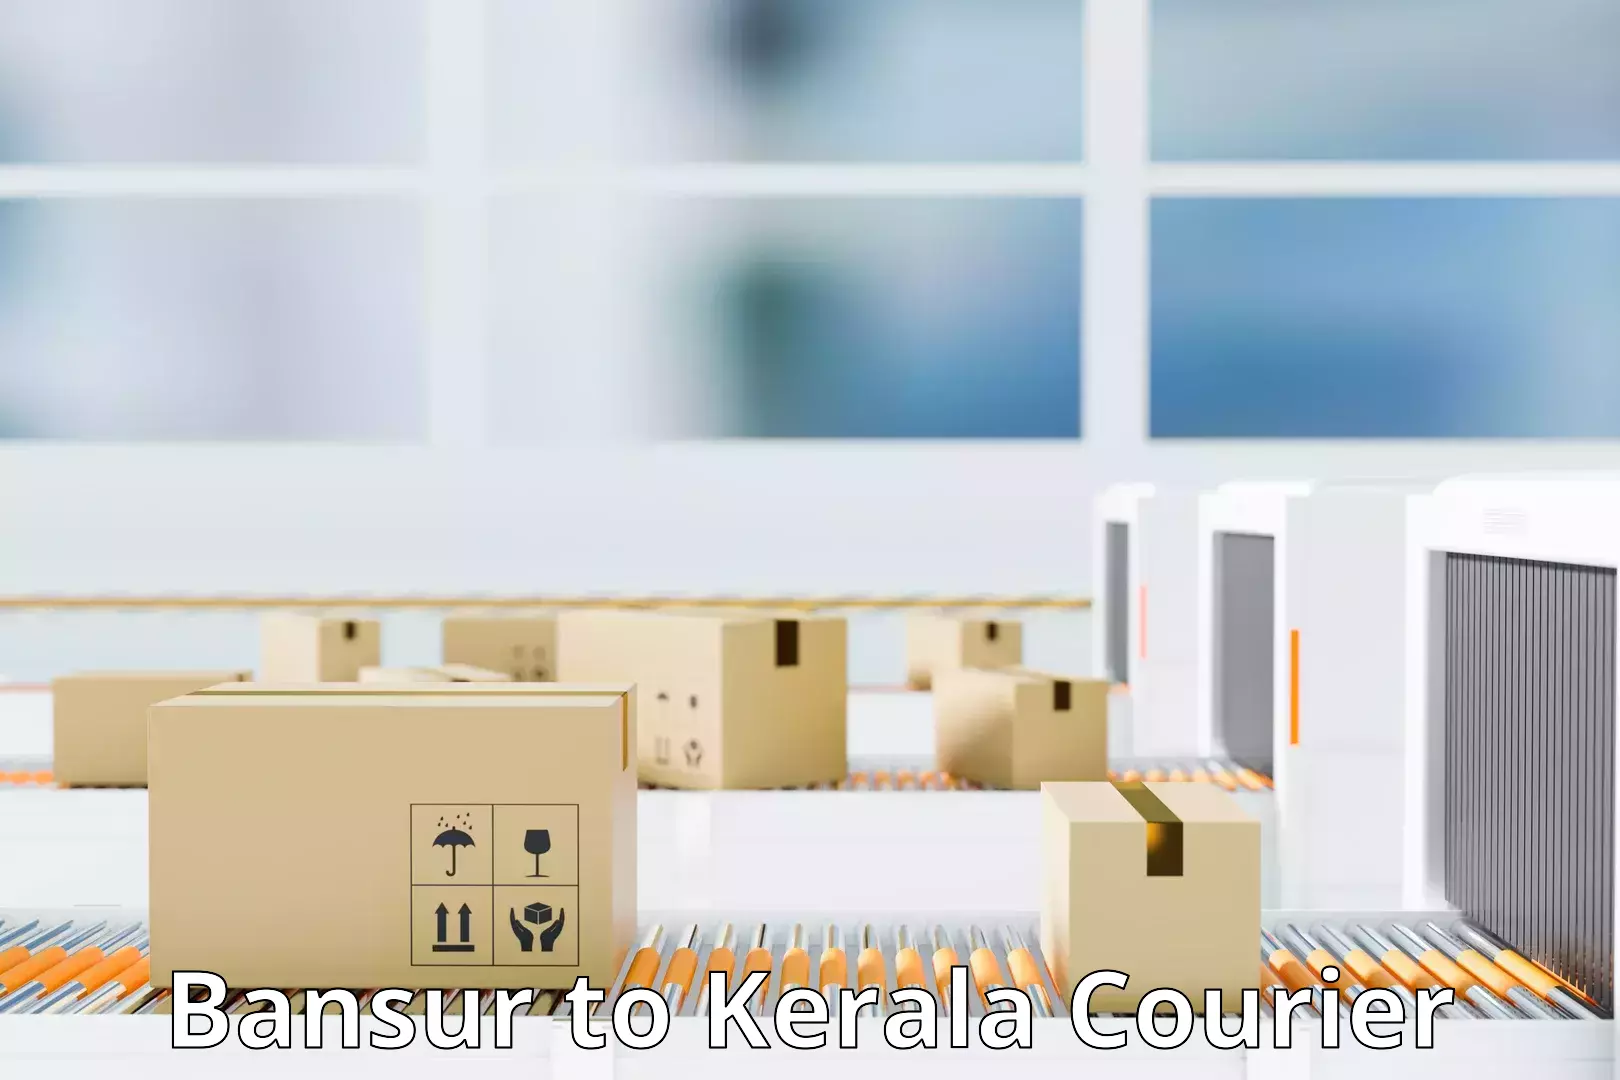 Global shipping networks Bansur to Cochin Port Kochi